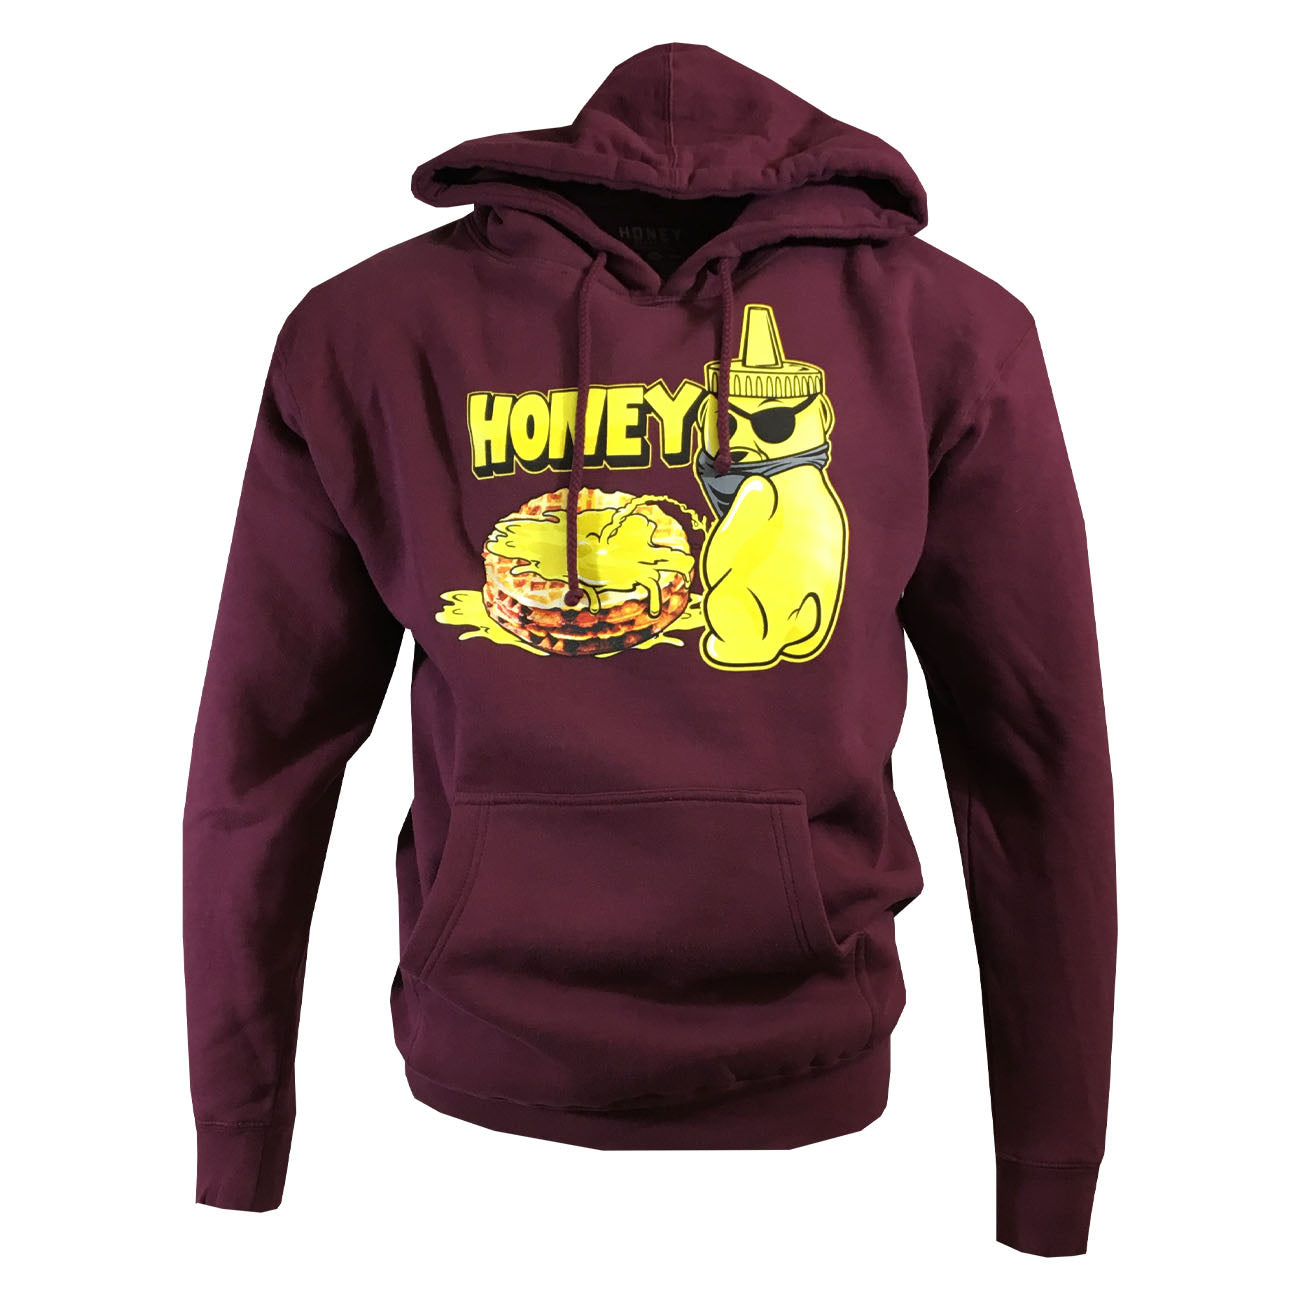 Honey Pullover Hoodie - Men's Sweatshirt - Burgundy with Gold Print